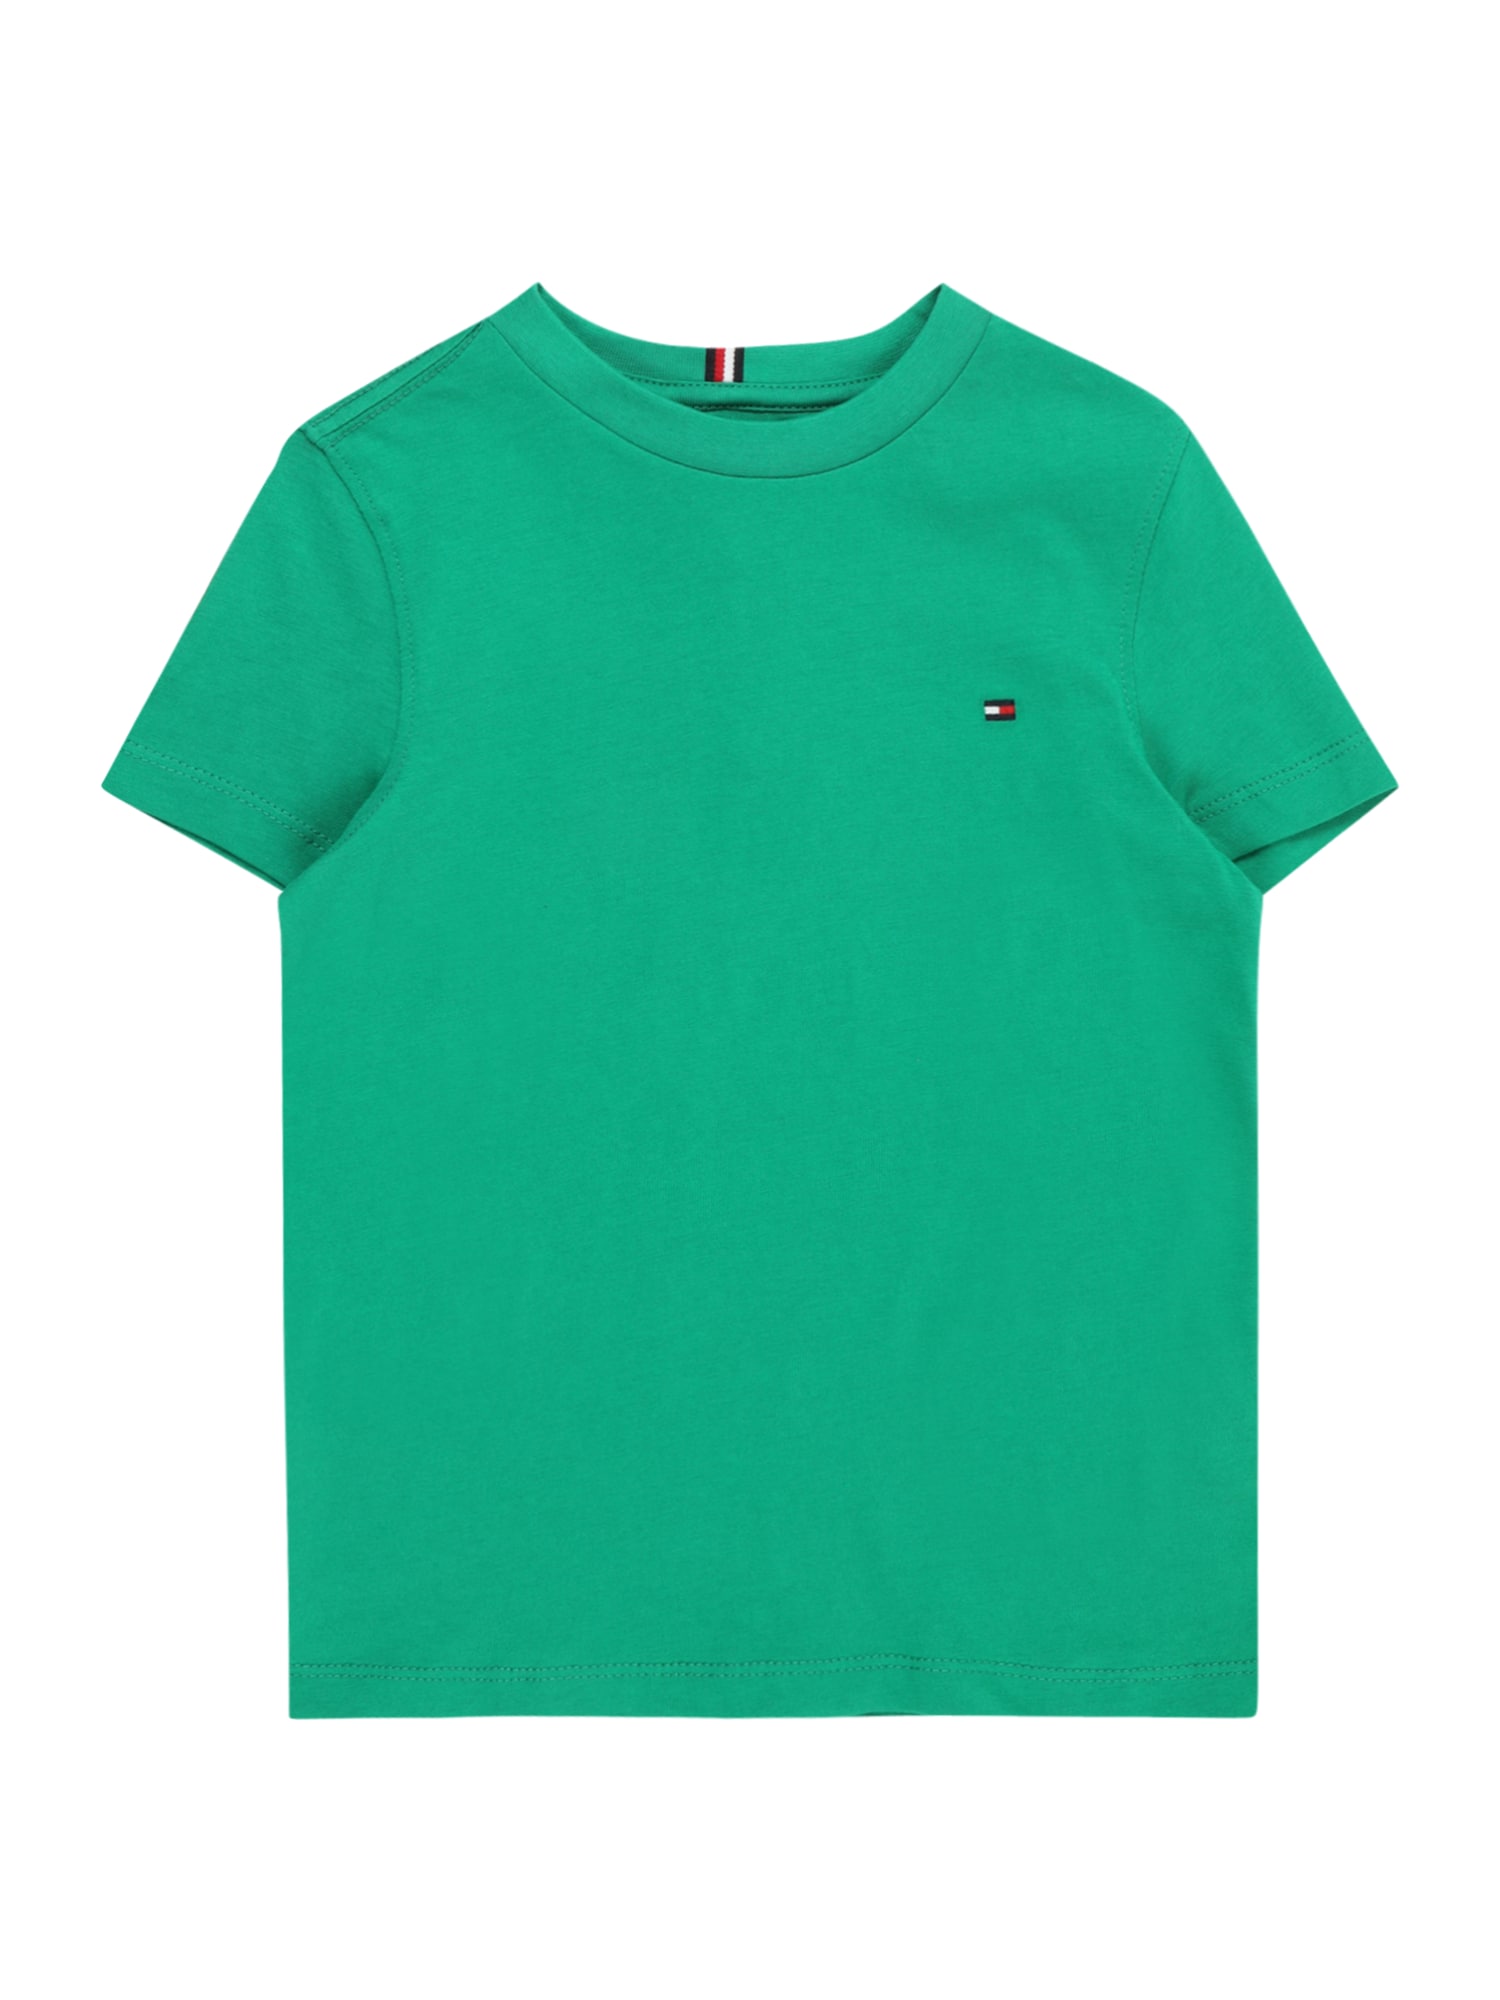 TOMMY HILFIGER Marškinėliai 'ESSENTIAL' tamsiai mėlyna jūros spalva / žalia / raudona / balta